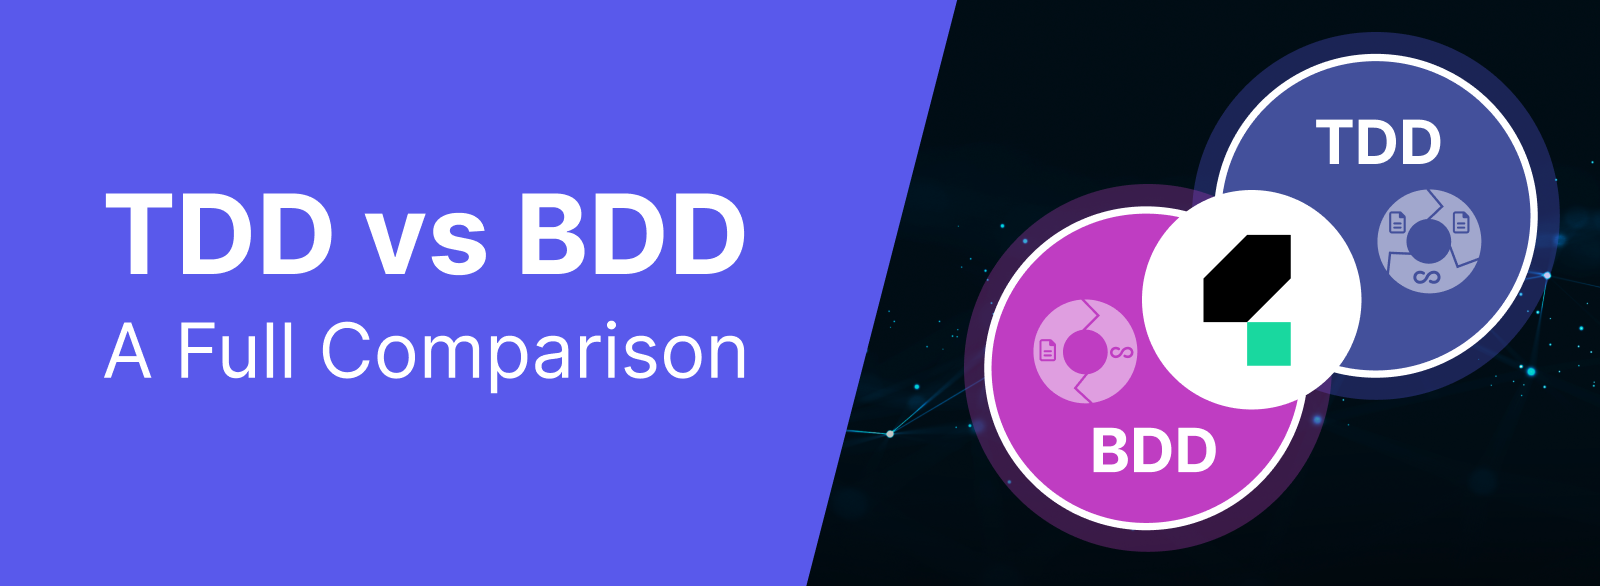 TDD vs BDD: A Full Comparison